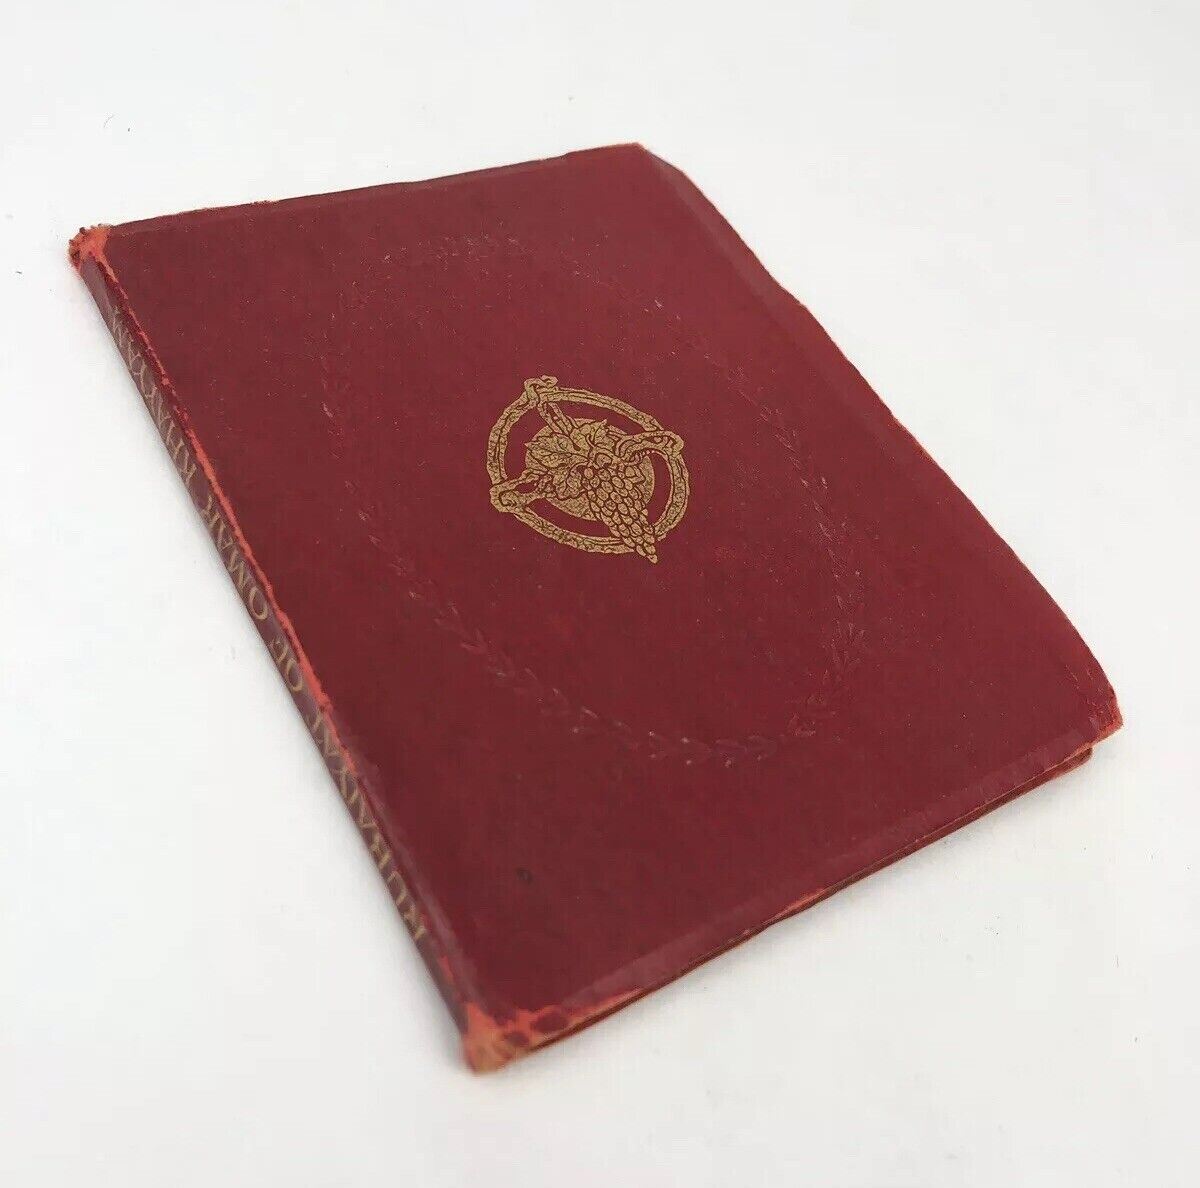 Rubaiyat Of Omar Khayyam 1909 FITZGERALD (Gem Series) Miniature 4th Edition